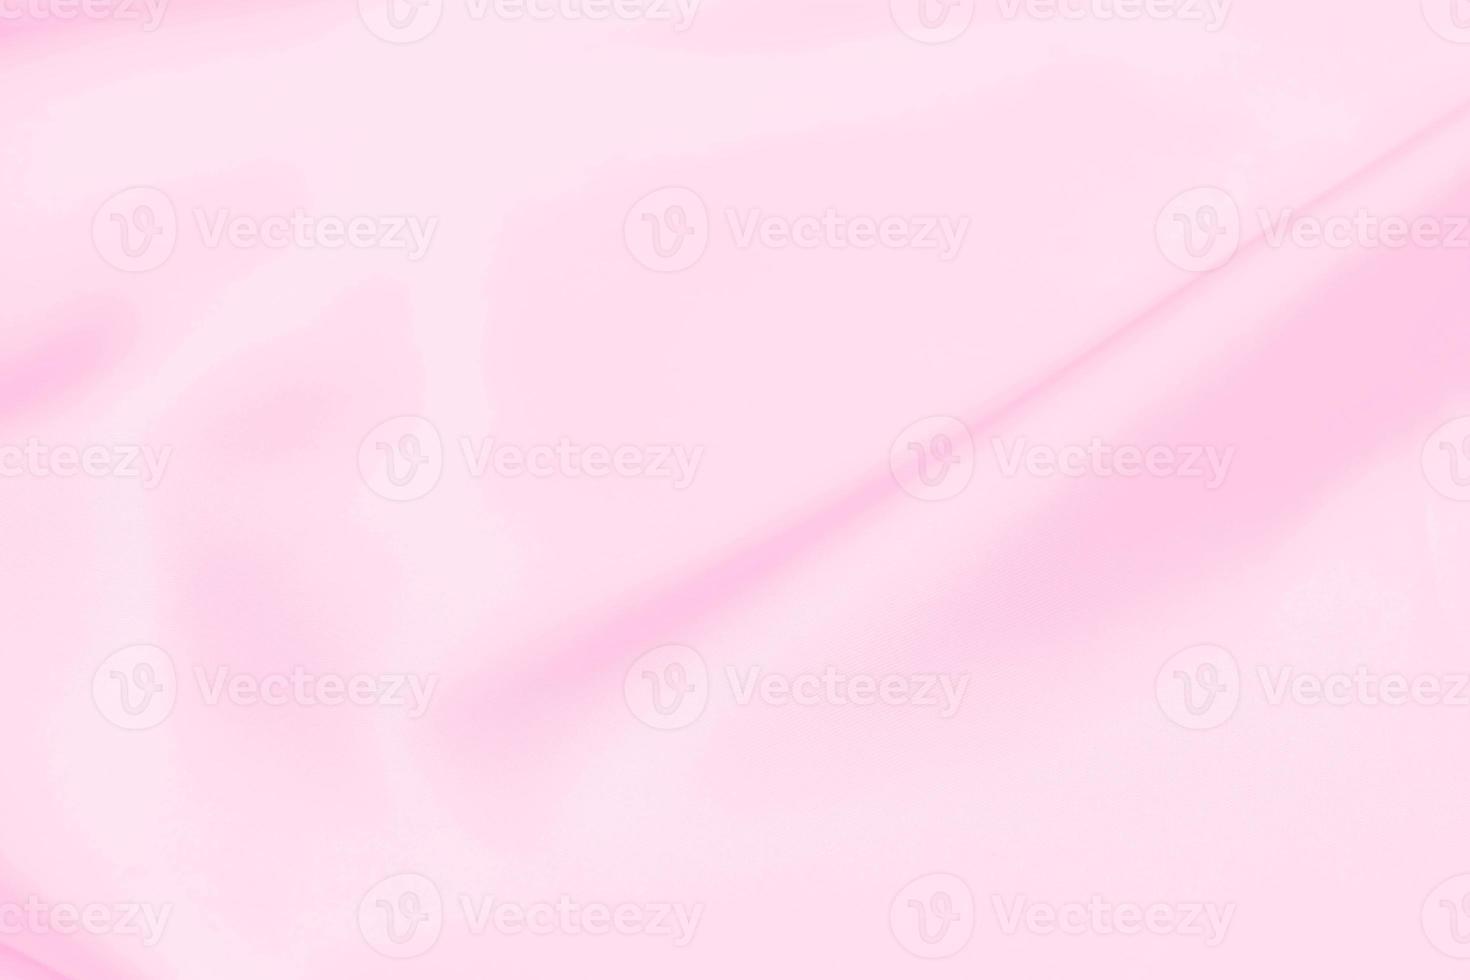 Fondo de desenfoque suave de textura de tela de satén rosa plástico foto